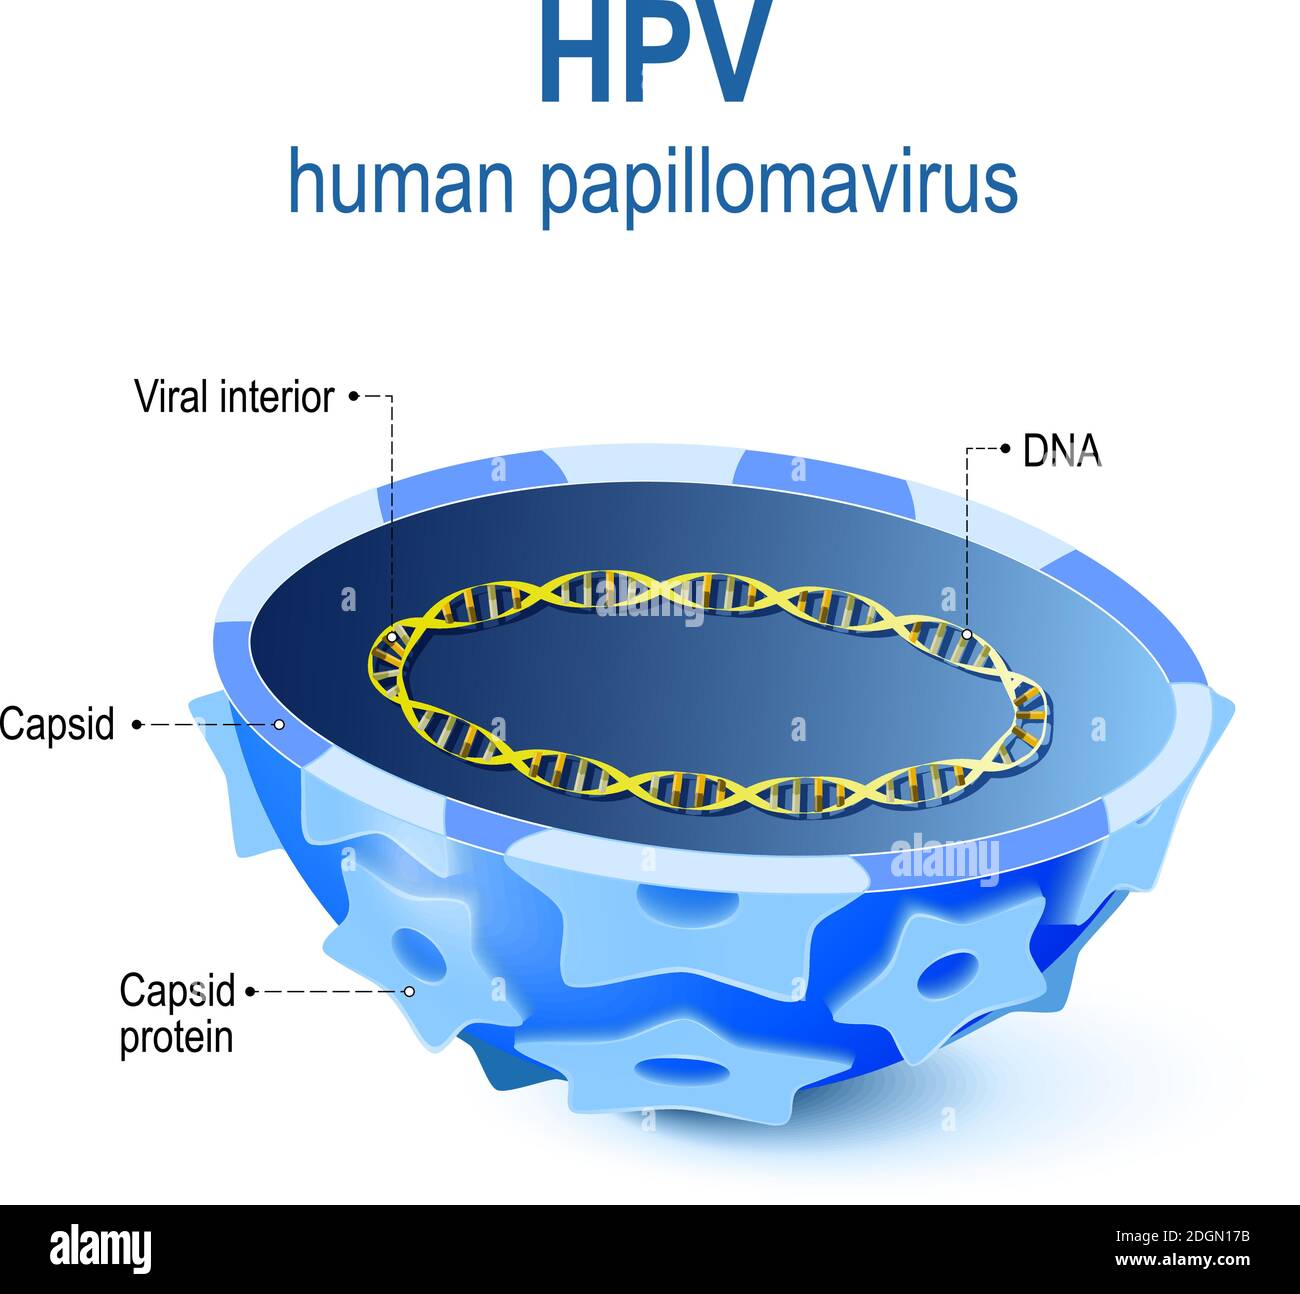 hpv - Human papillomavirus. Vector illustration of Viral interior. cross section of capsid papillomavirus with viral DNA. HPV is a infection Stock Vector